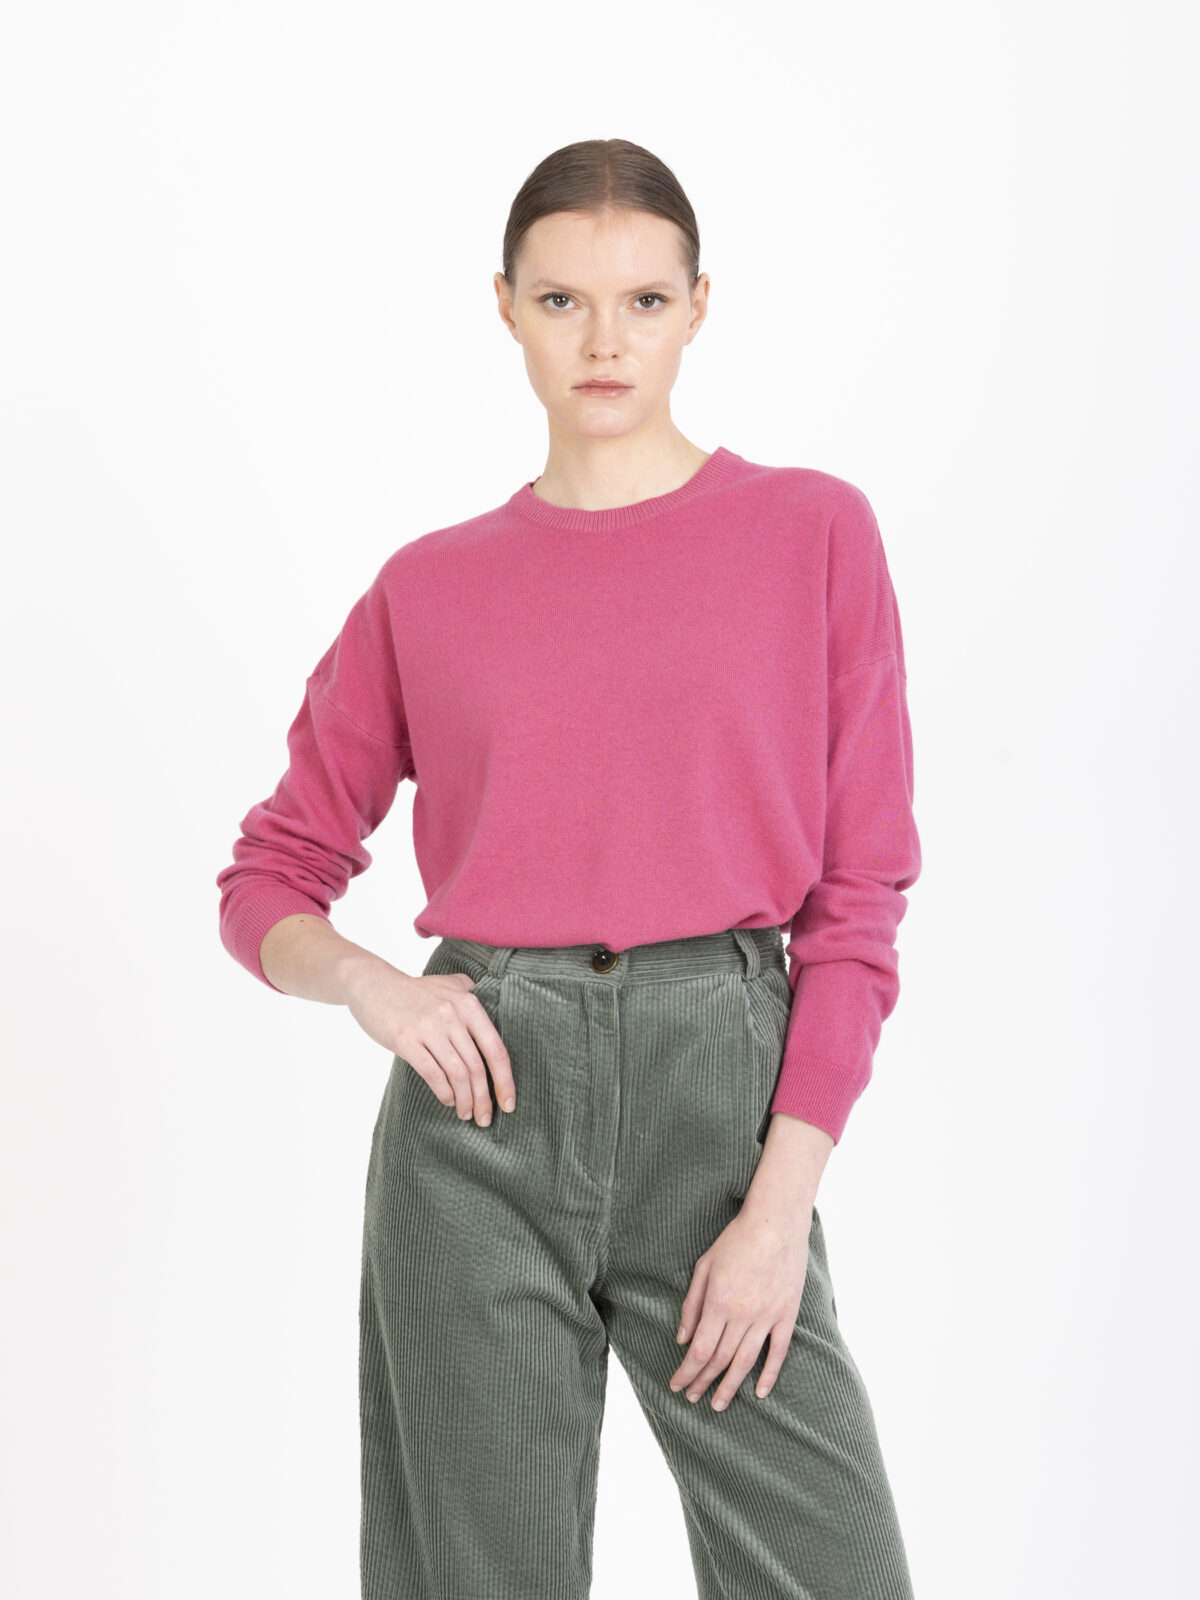 mostil-pink-round-neck-wool-sweater-crossley-matchboxathens